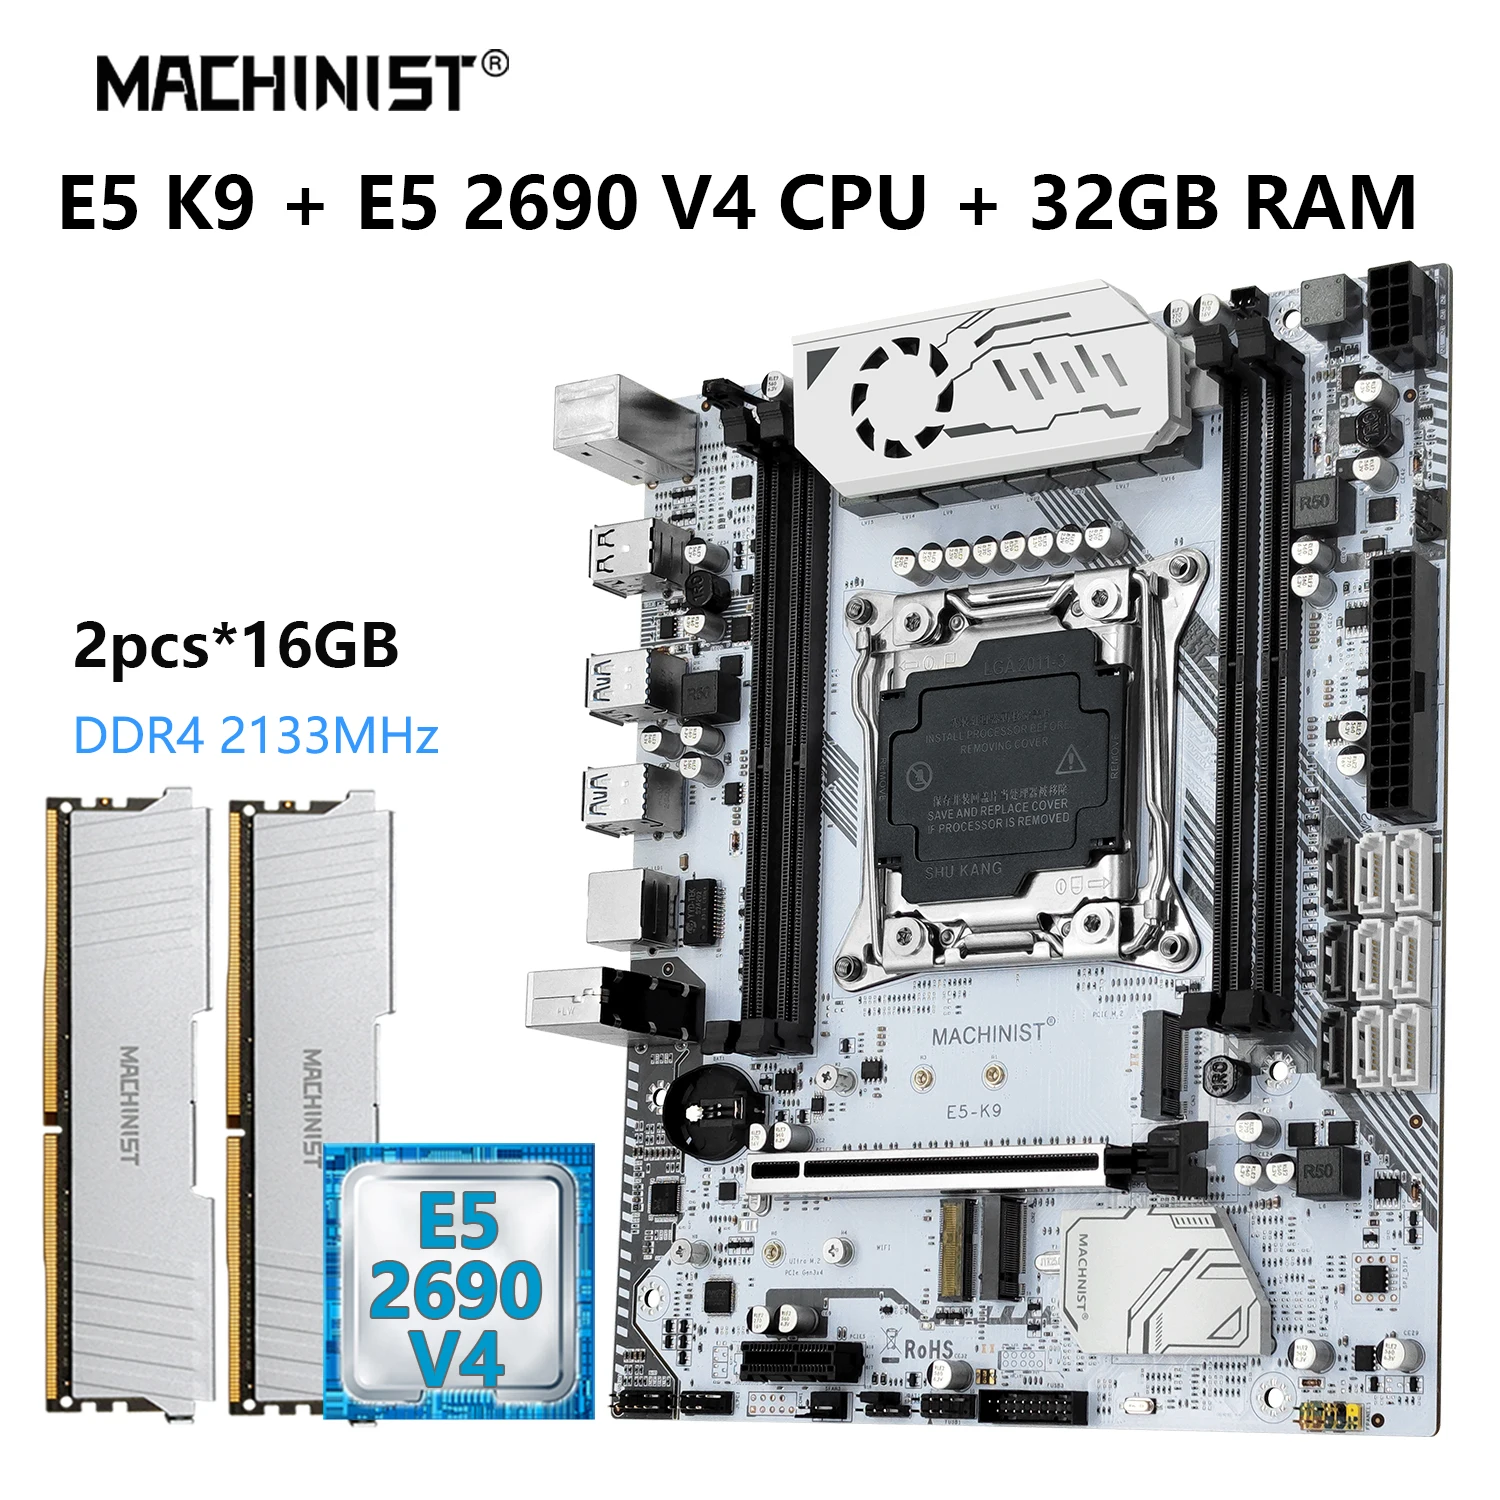 MACHINIS X99 Emaplaadi Komplekti LGA-2011-3 Kit Xeon E5 2690 V4 Protsessor CPU+ ECC DDR4 16GB RAM*2 Mälu, usb3.0 NVME M. 2*2 M-ATX k9 - 0